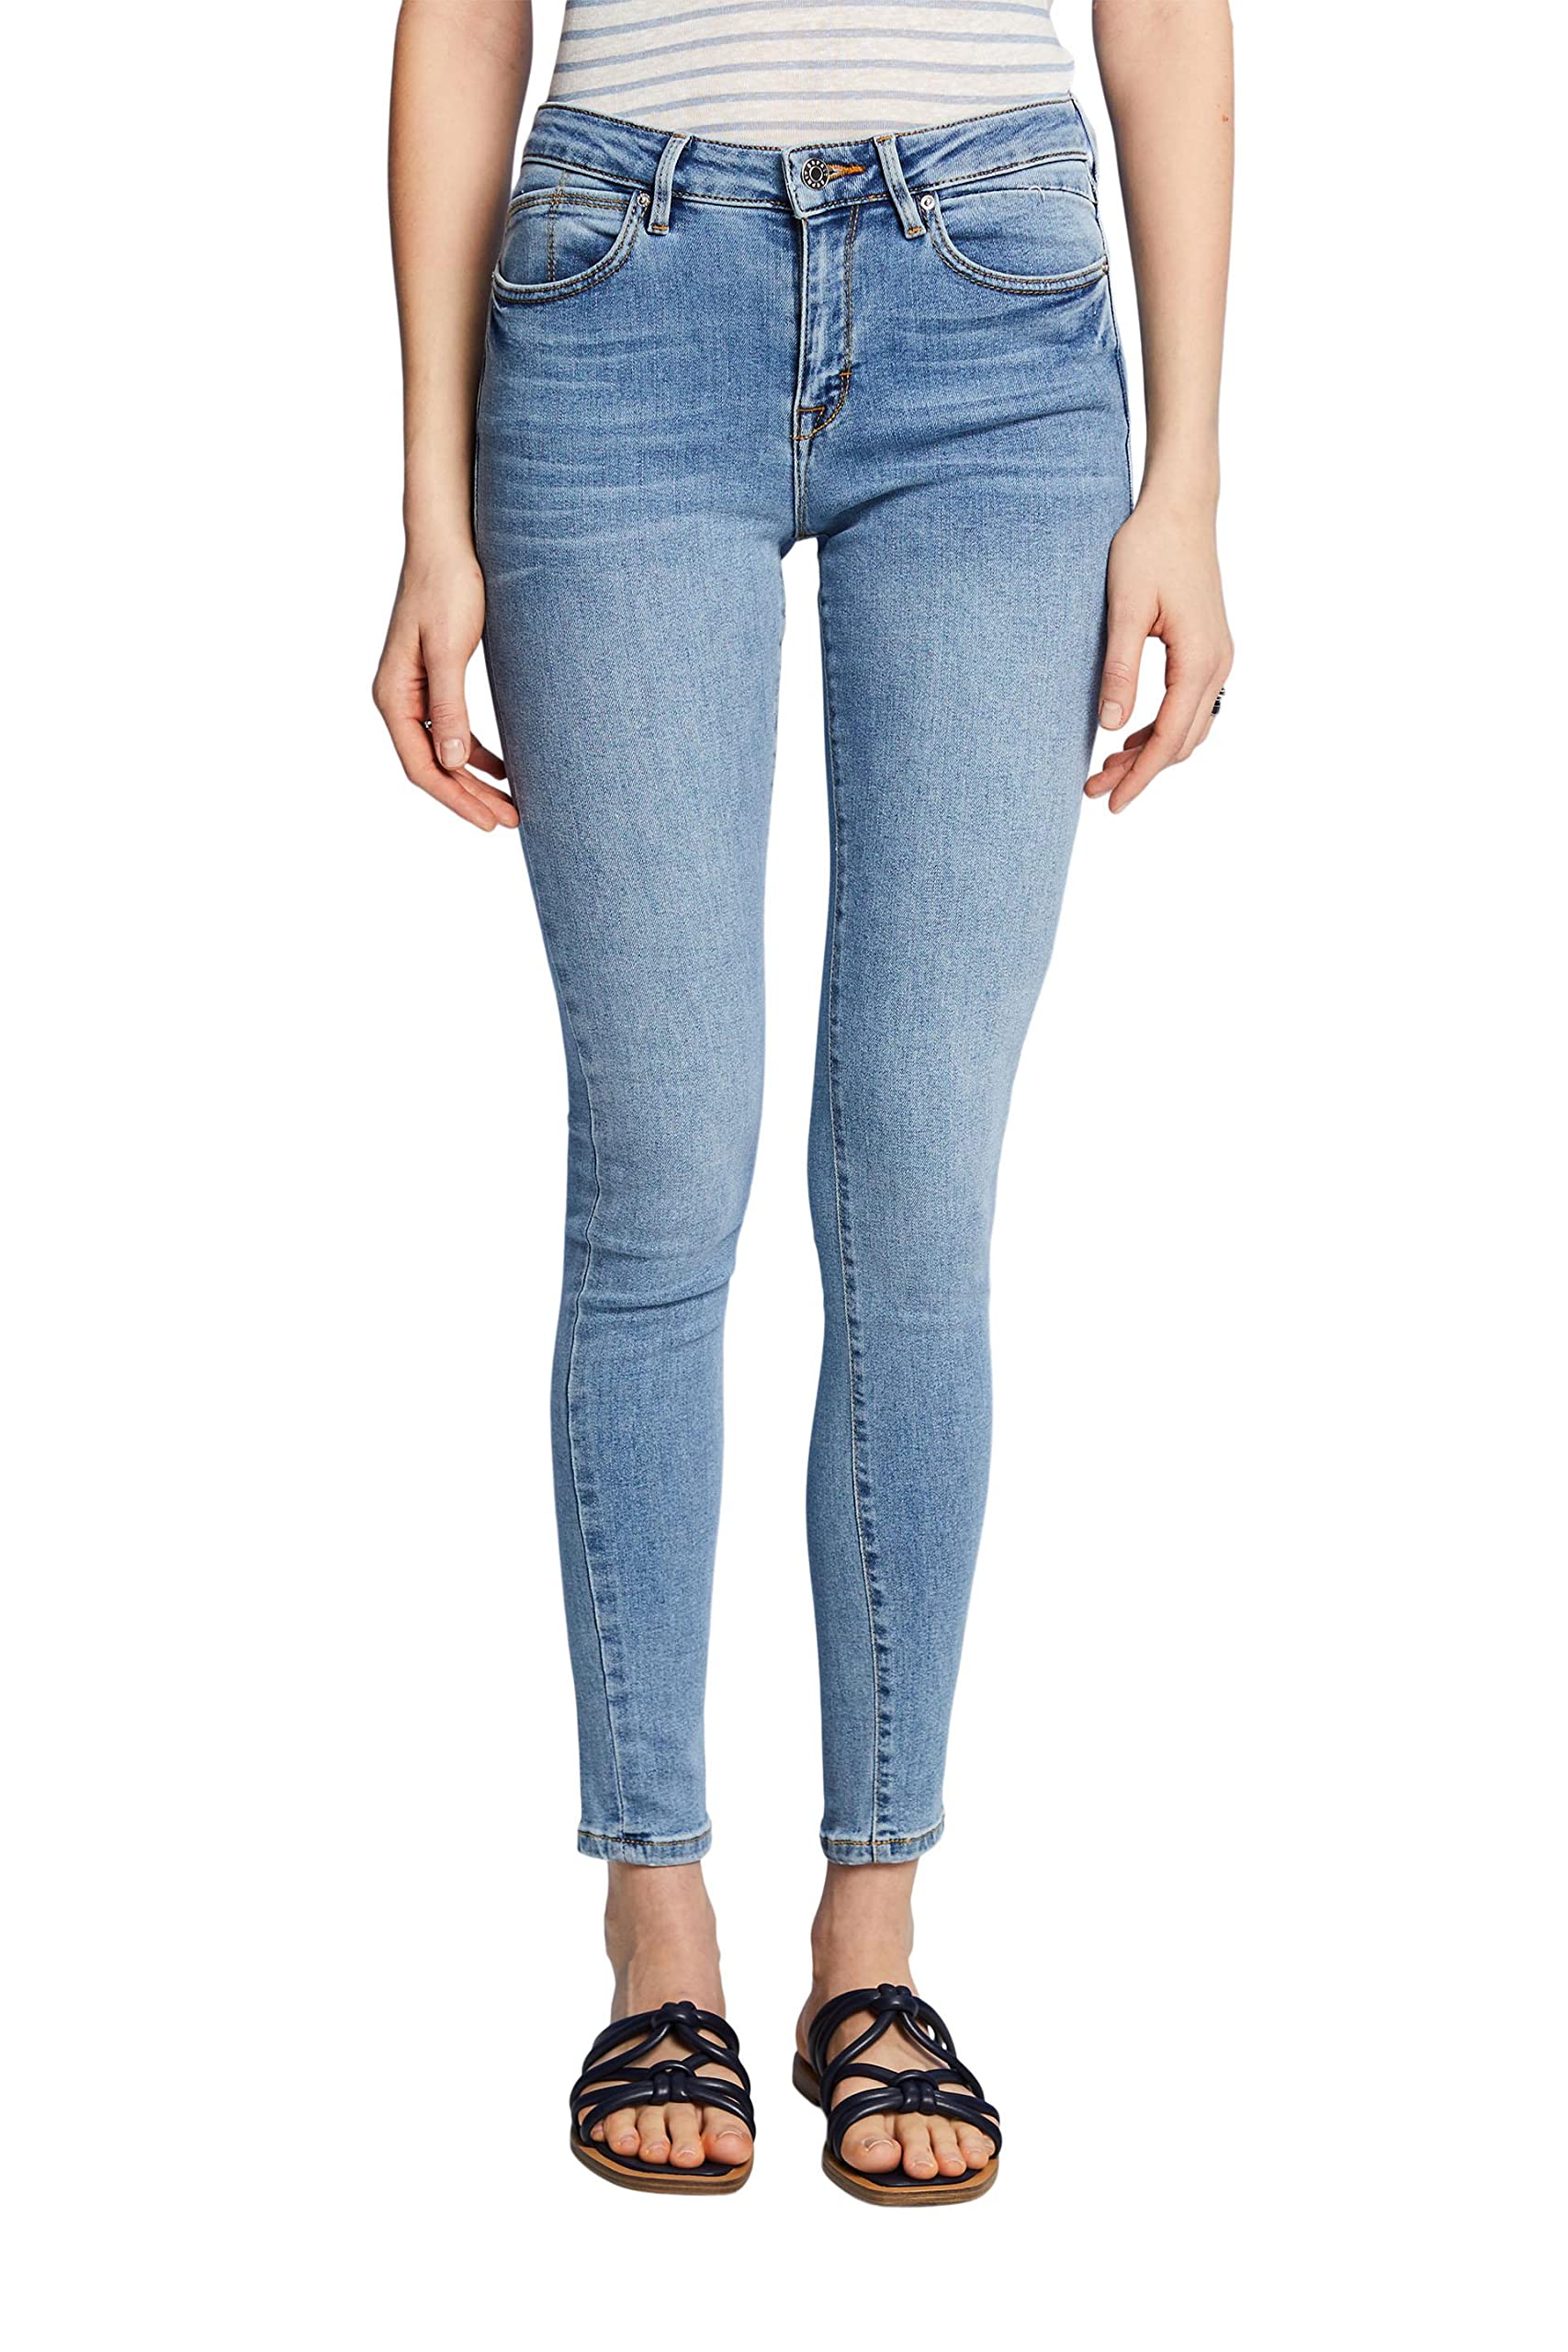 ESPRIT Women's Jeggings Skinny Fit Jeans , SKINNY, BLUE LIGHT WASHED, 30W / 30L